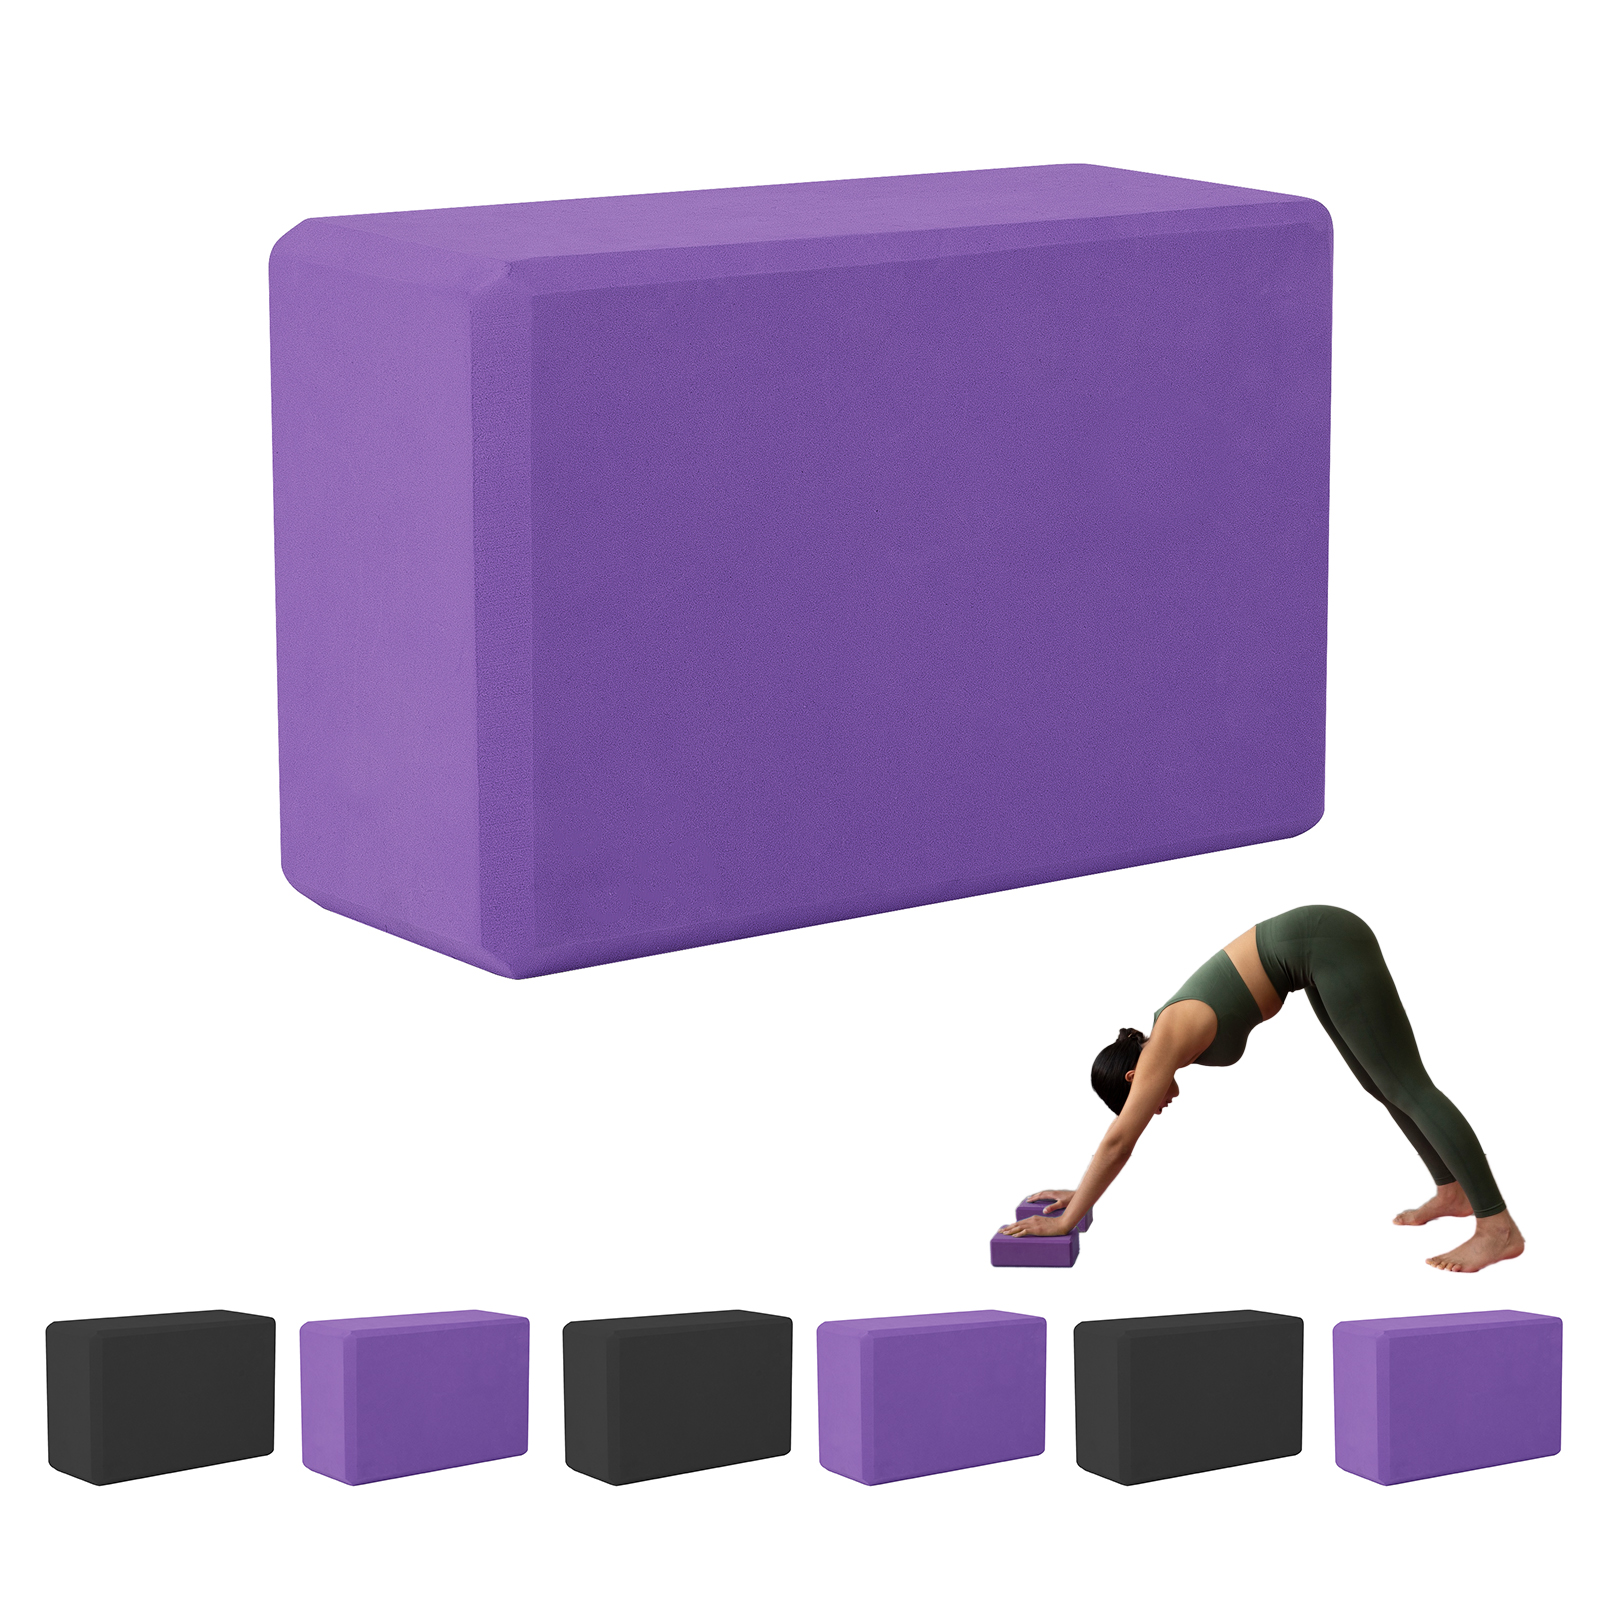 Heathyoga Yoga Blocks 2 Pack with Strap, High Density EVA Foam